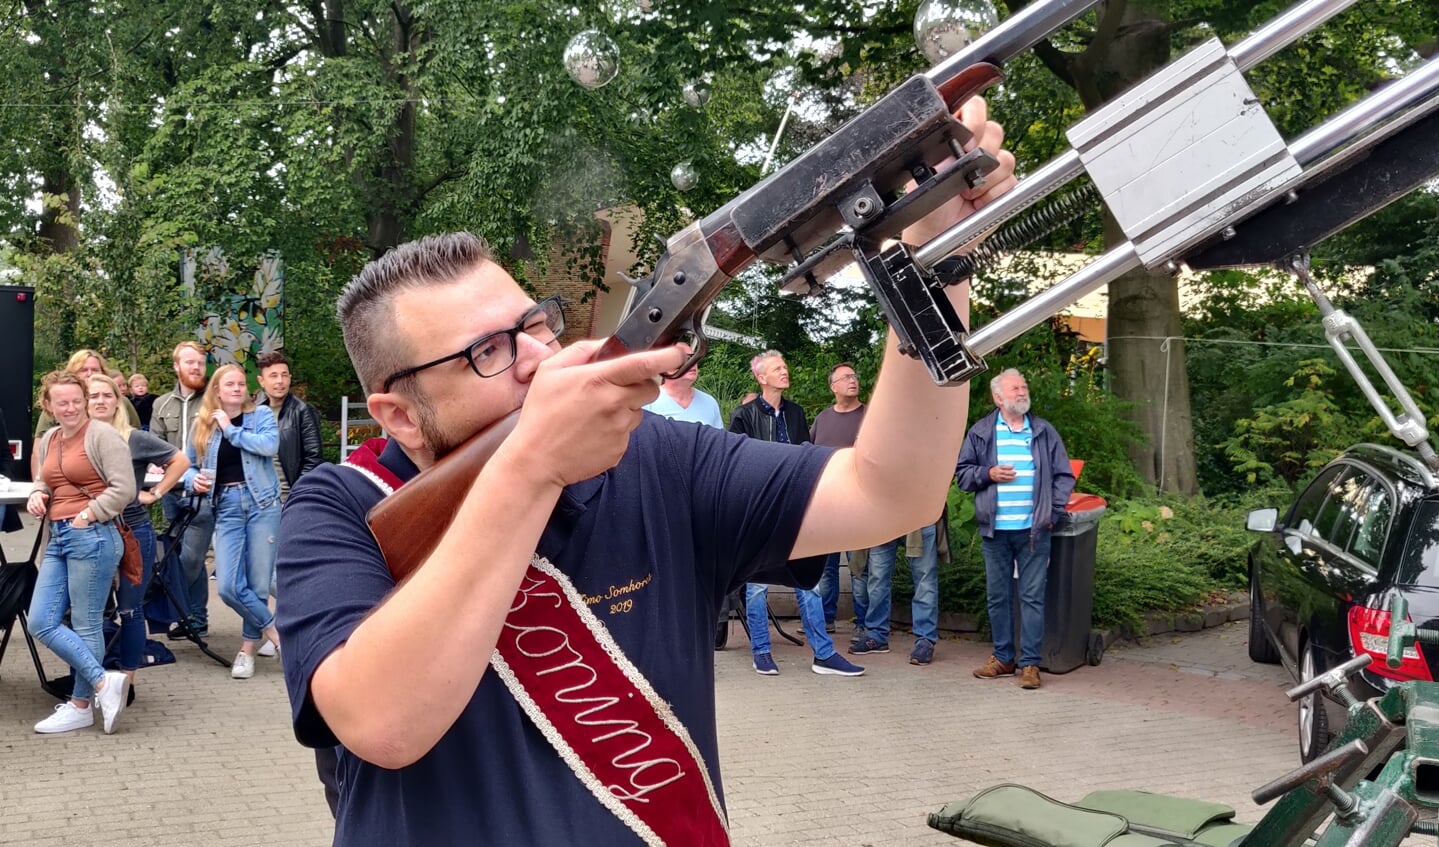 Schutterskoning van 2019, Timo Somhorst, richt op het geweer. Foto: Rob Stevens